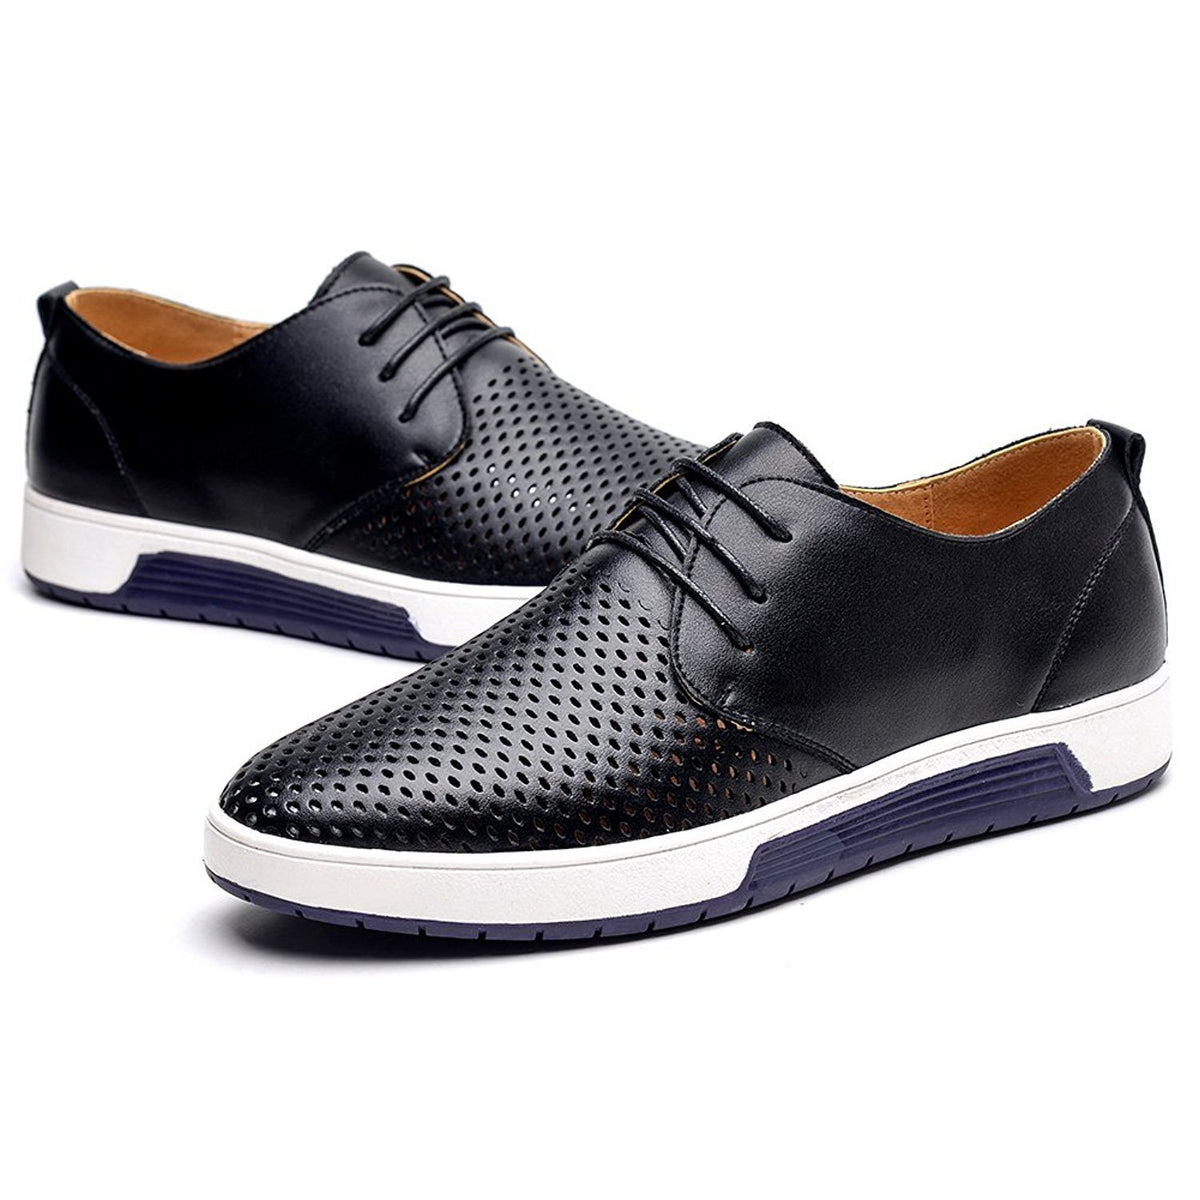 TIOSEBON丨Men’s Casual Oxford Shoes Flat Lace-up Dress Shoes丨KONHILL ...